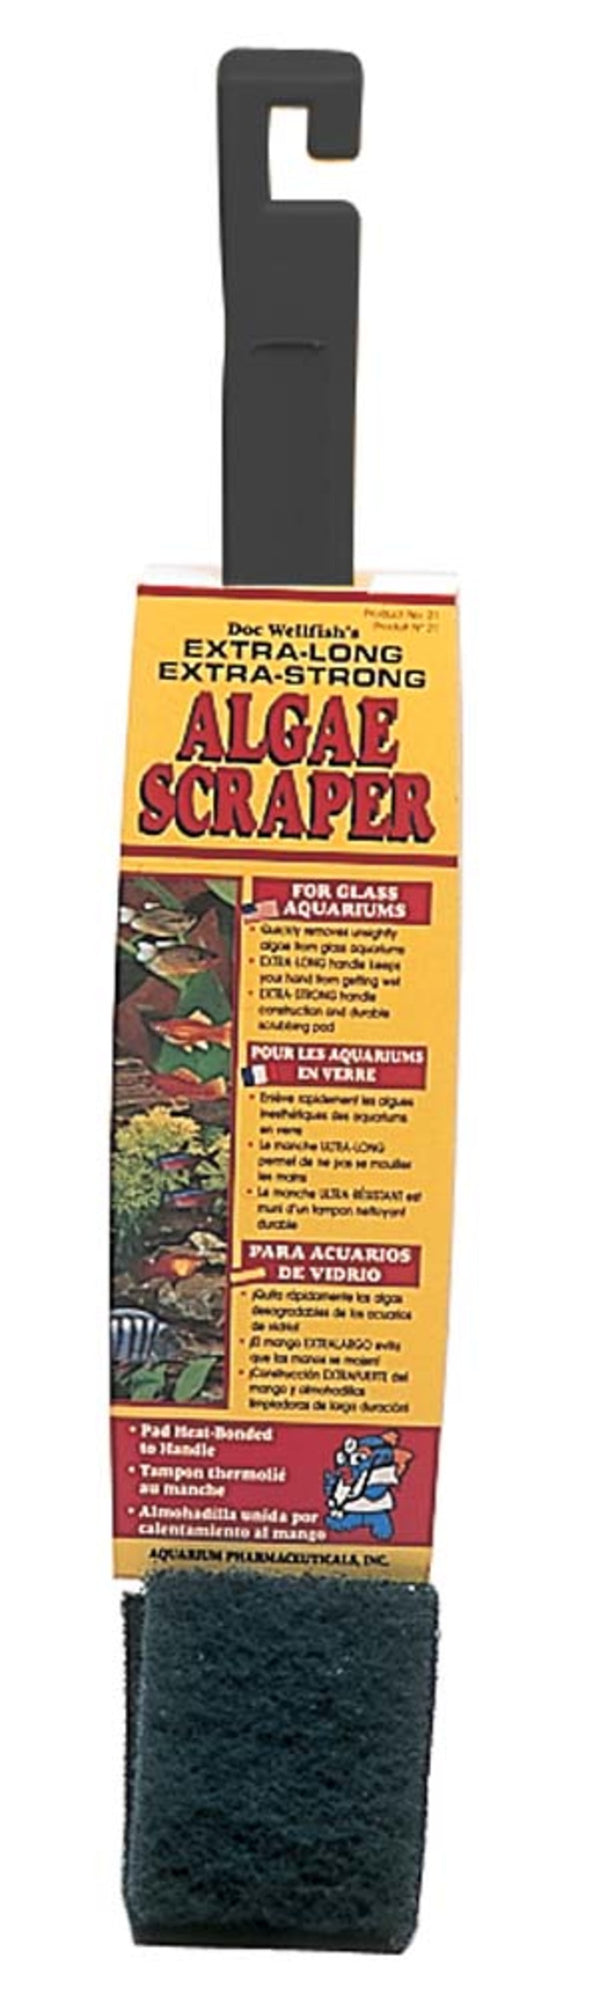 API Algae Scraper for glass aquariums